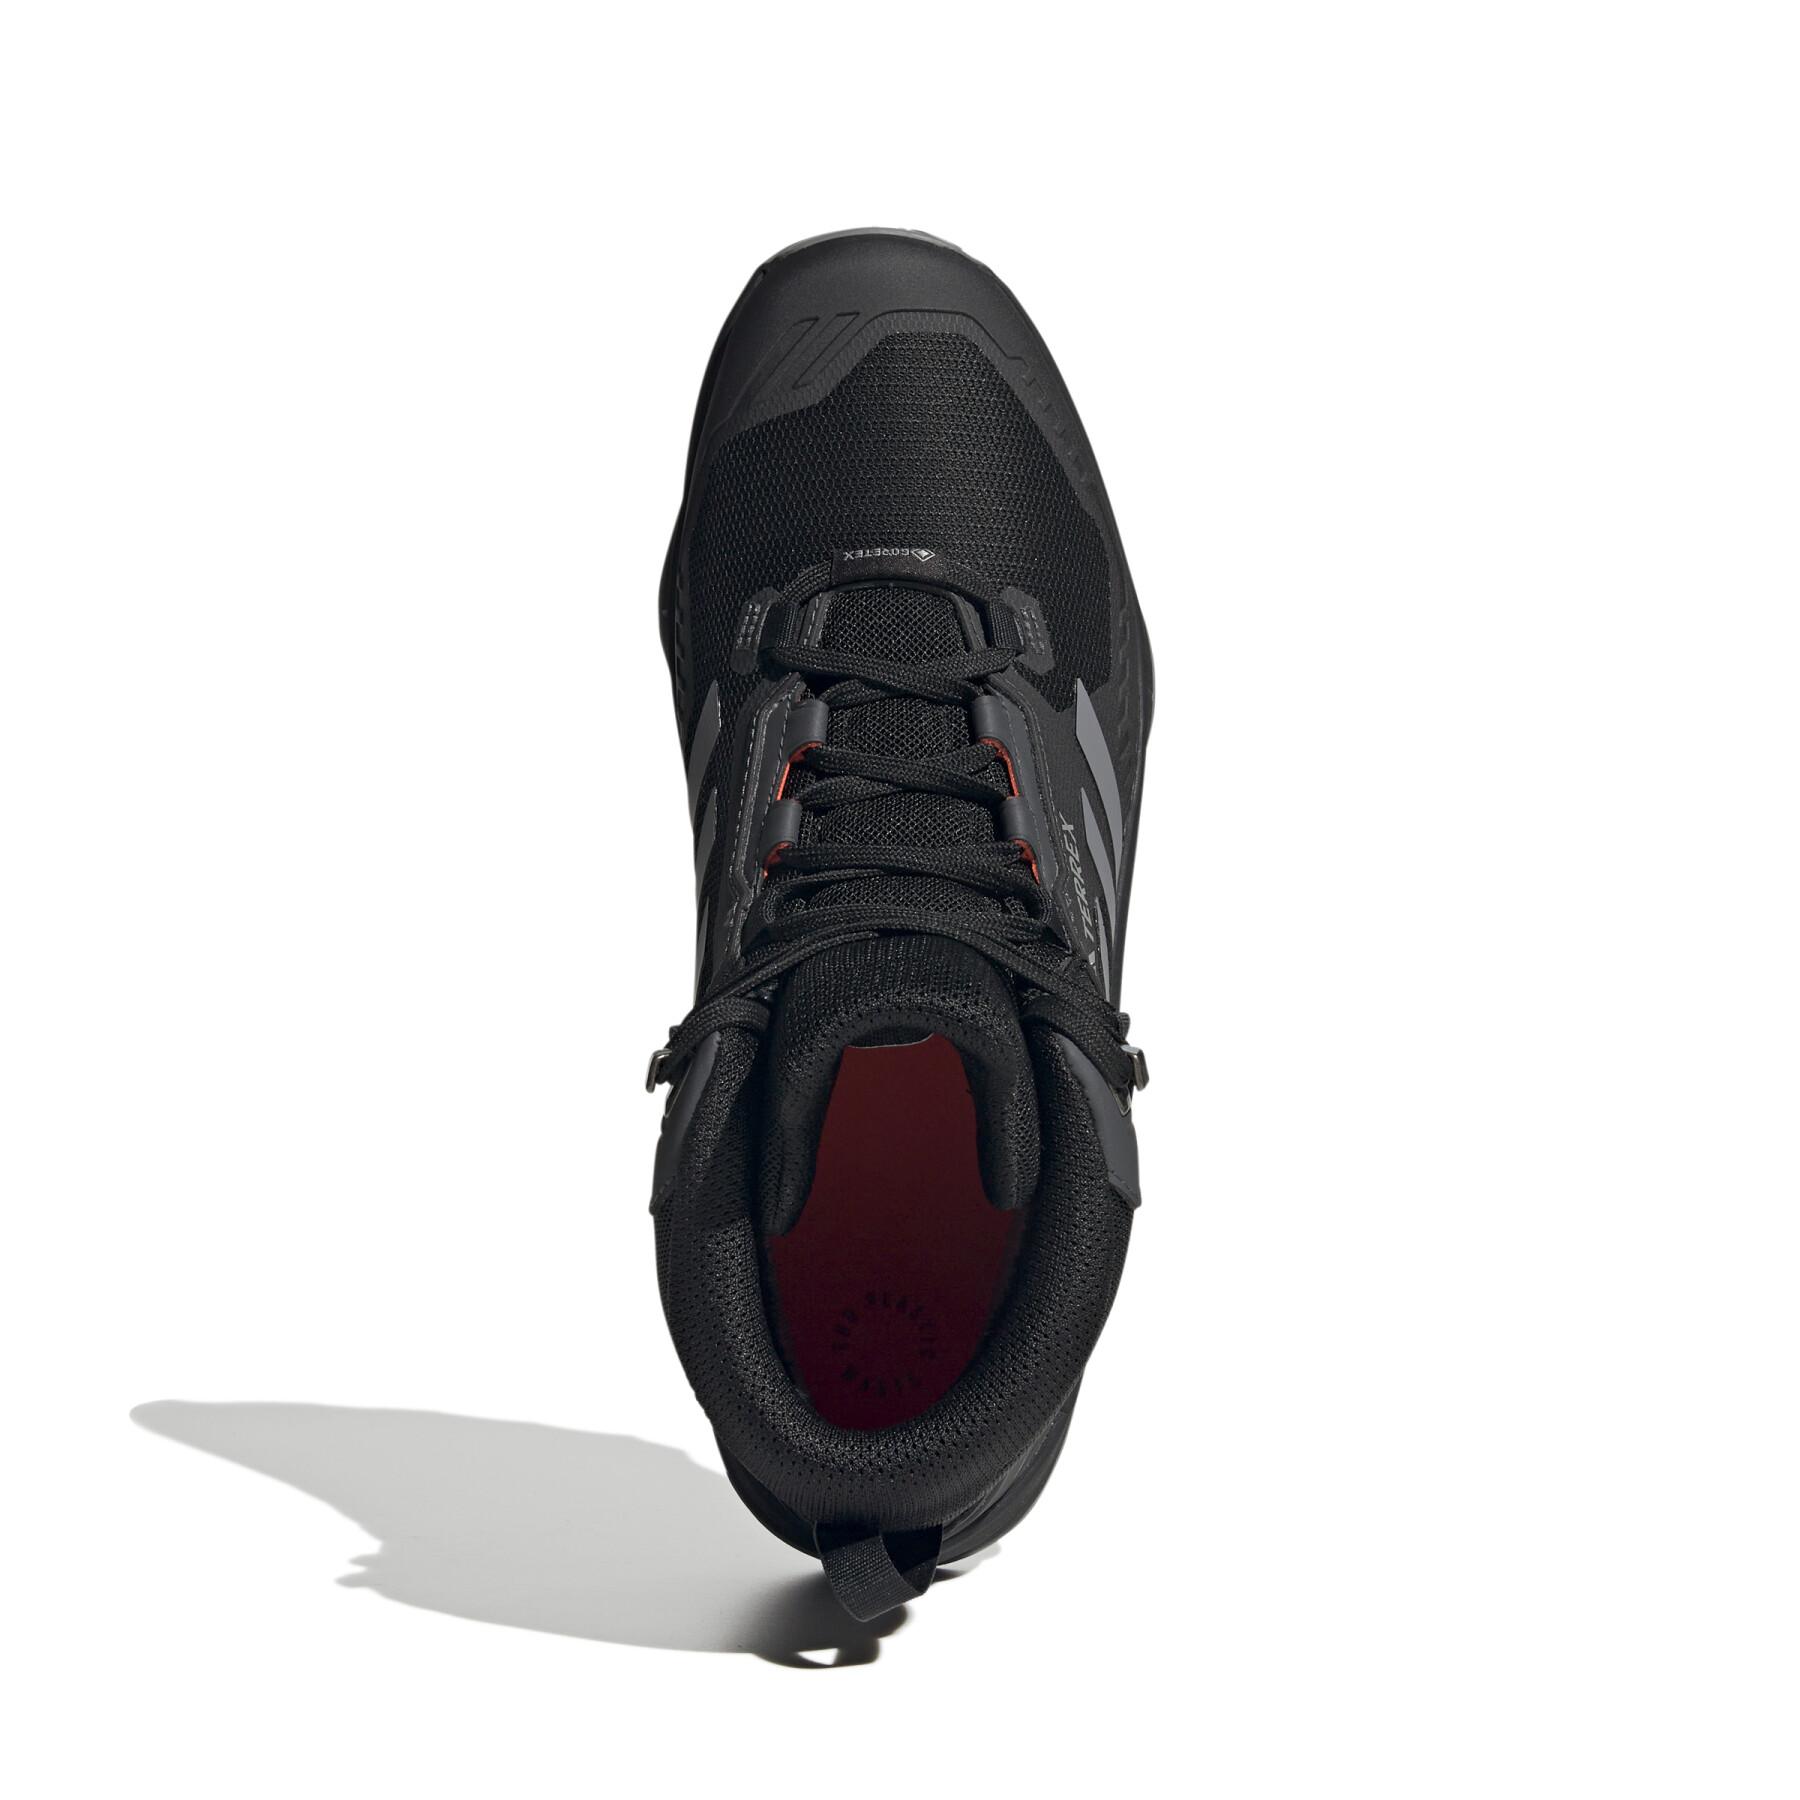 Chaussures de randonnée adidas Terrex Swift R3 Mid Gore-Tex